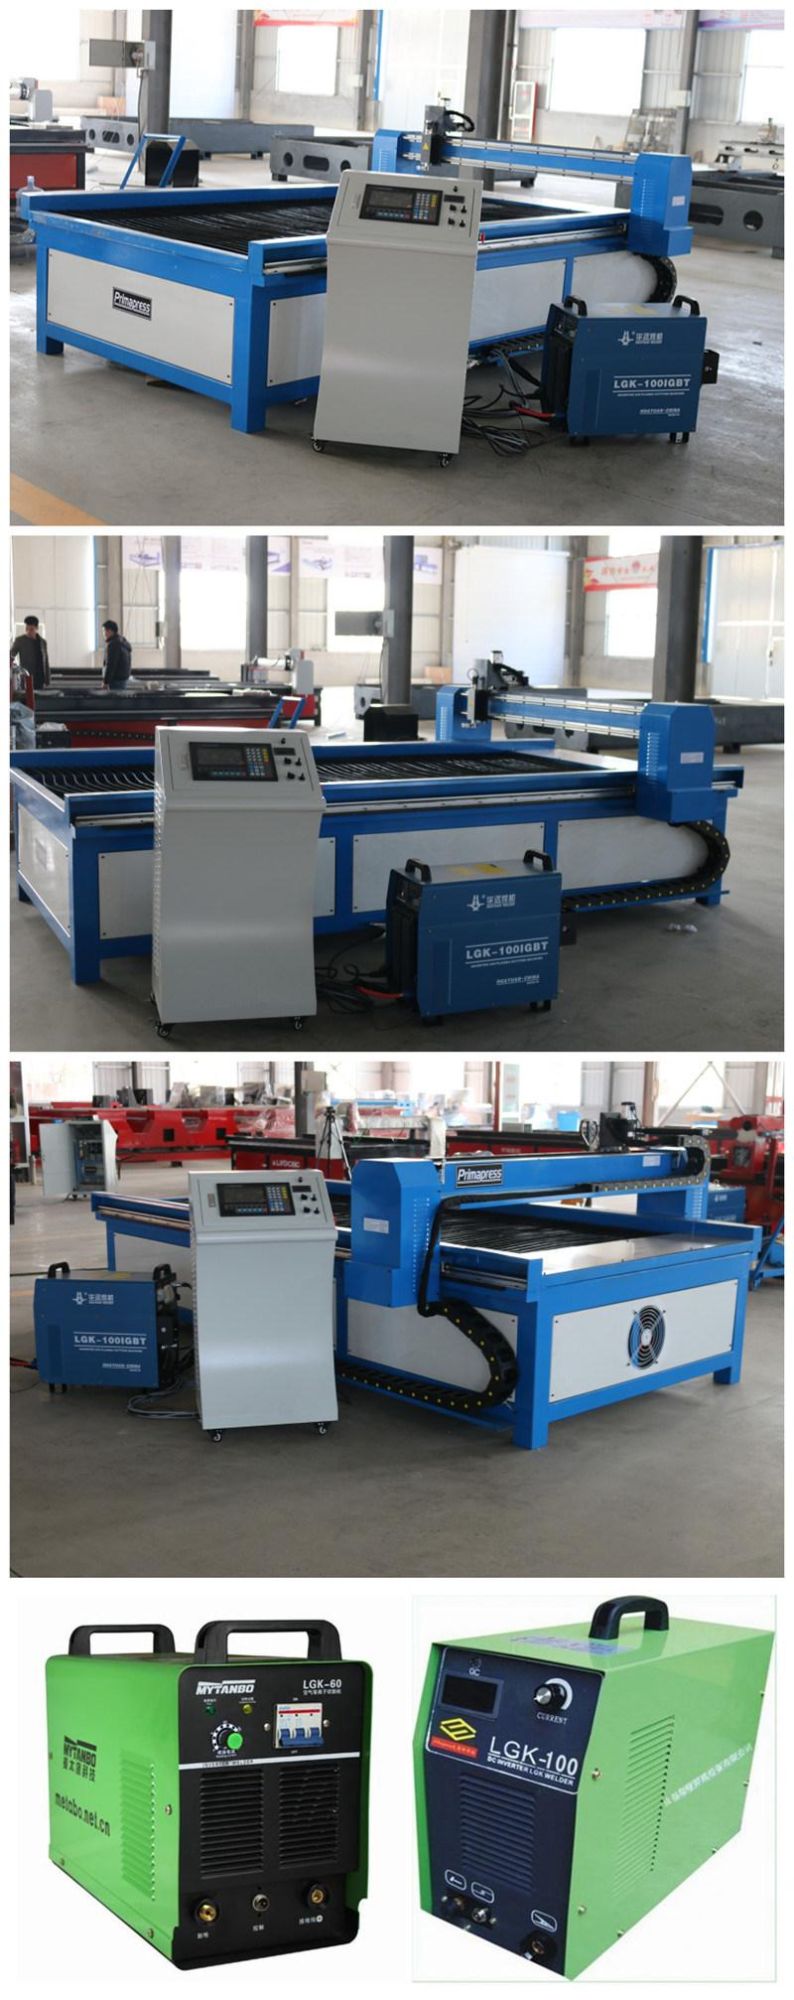 Copper CNC Plasma Cutting Machine, Aluminum Cutting Machine, Plasma Cutting Machine 1530